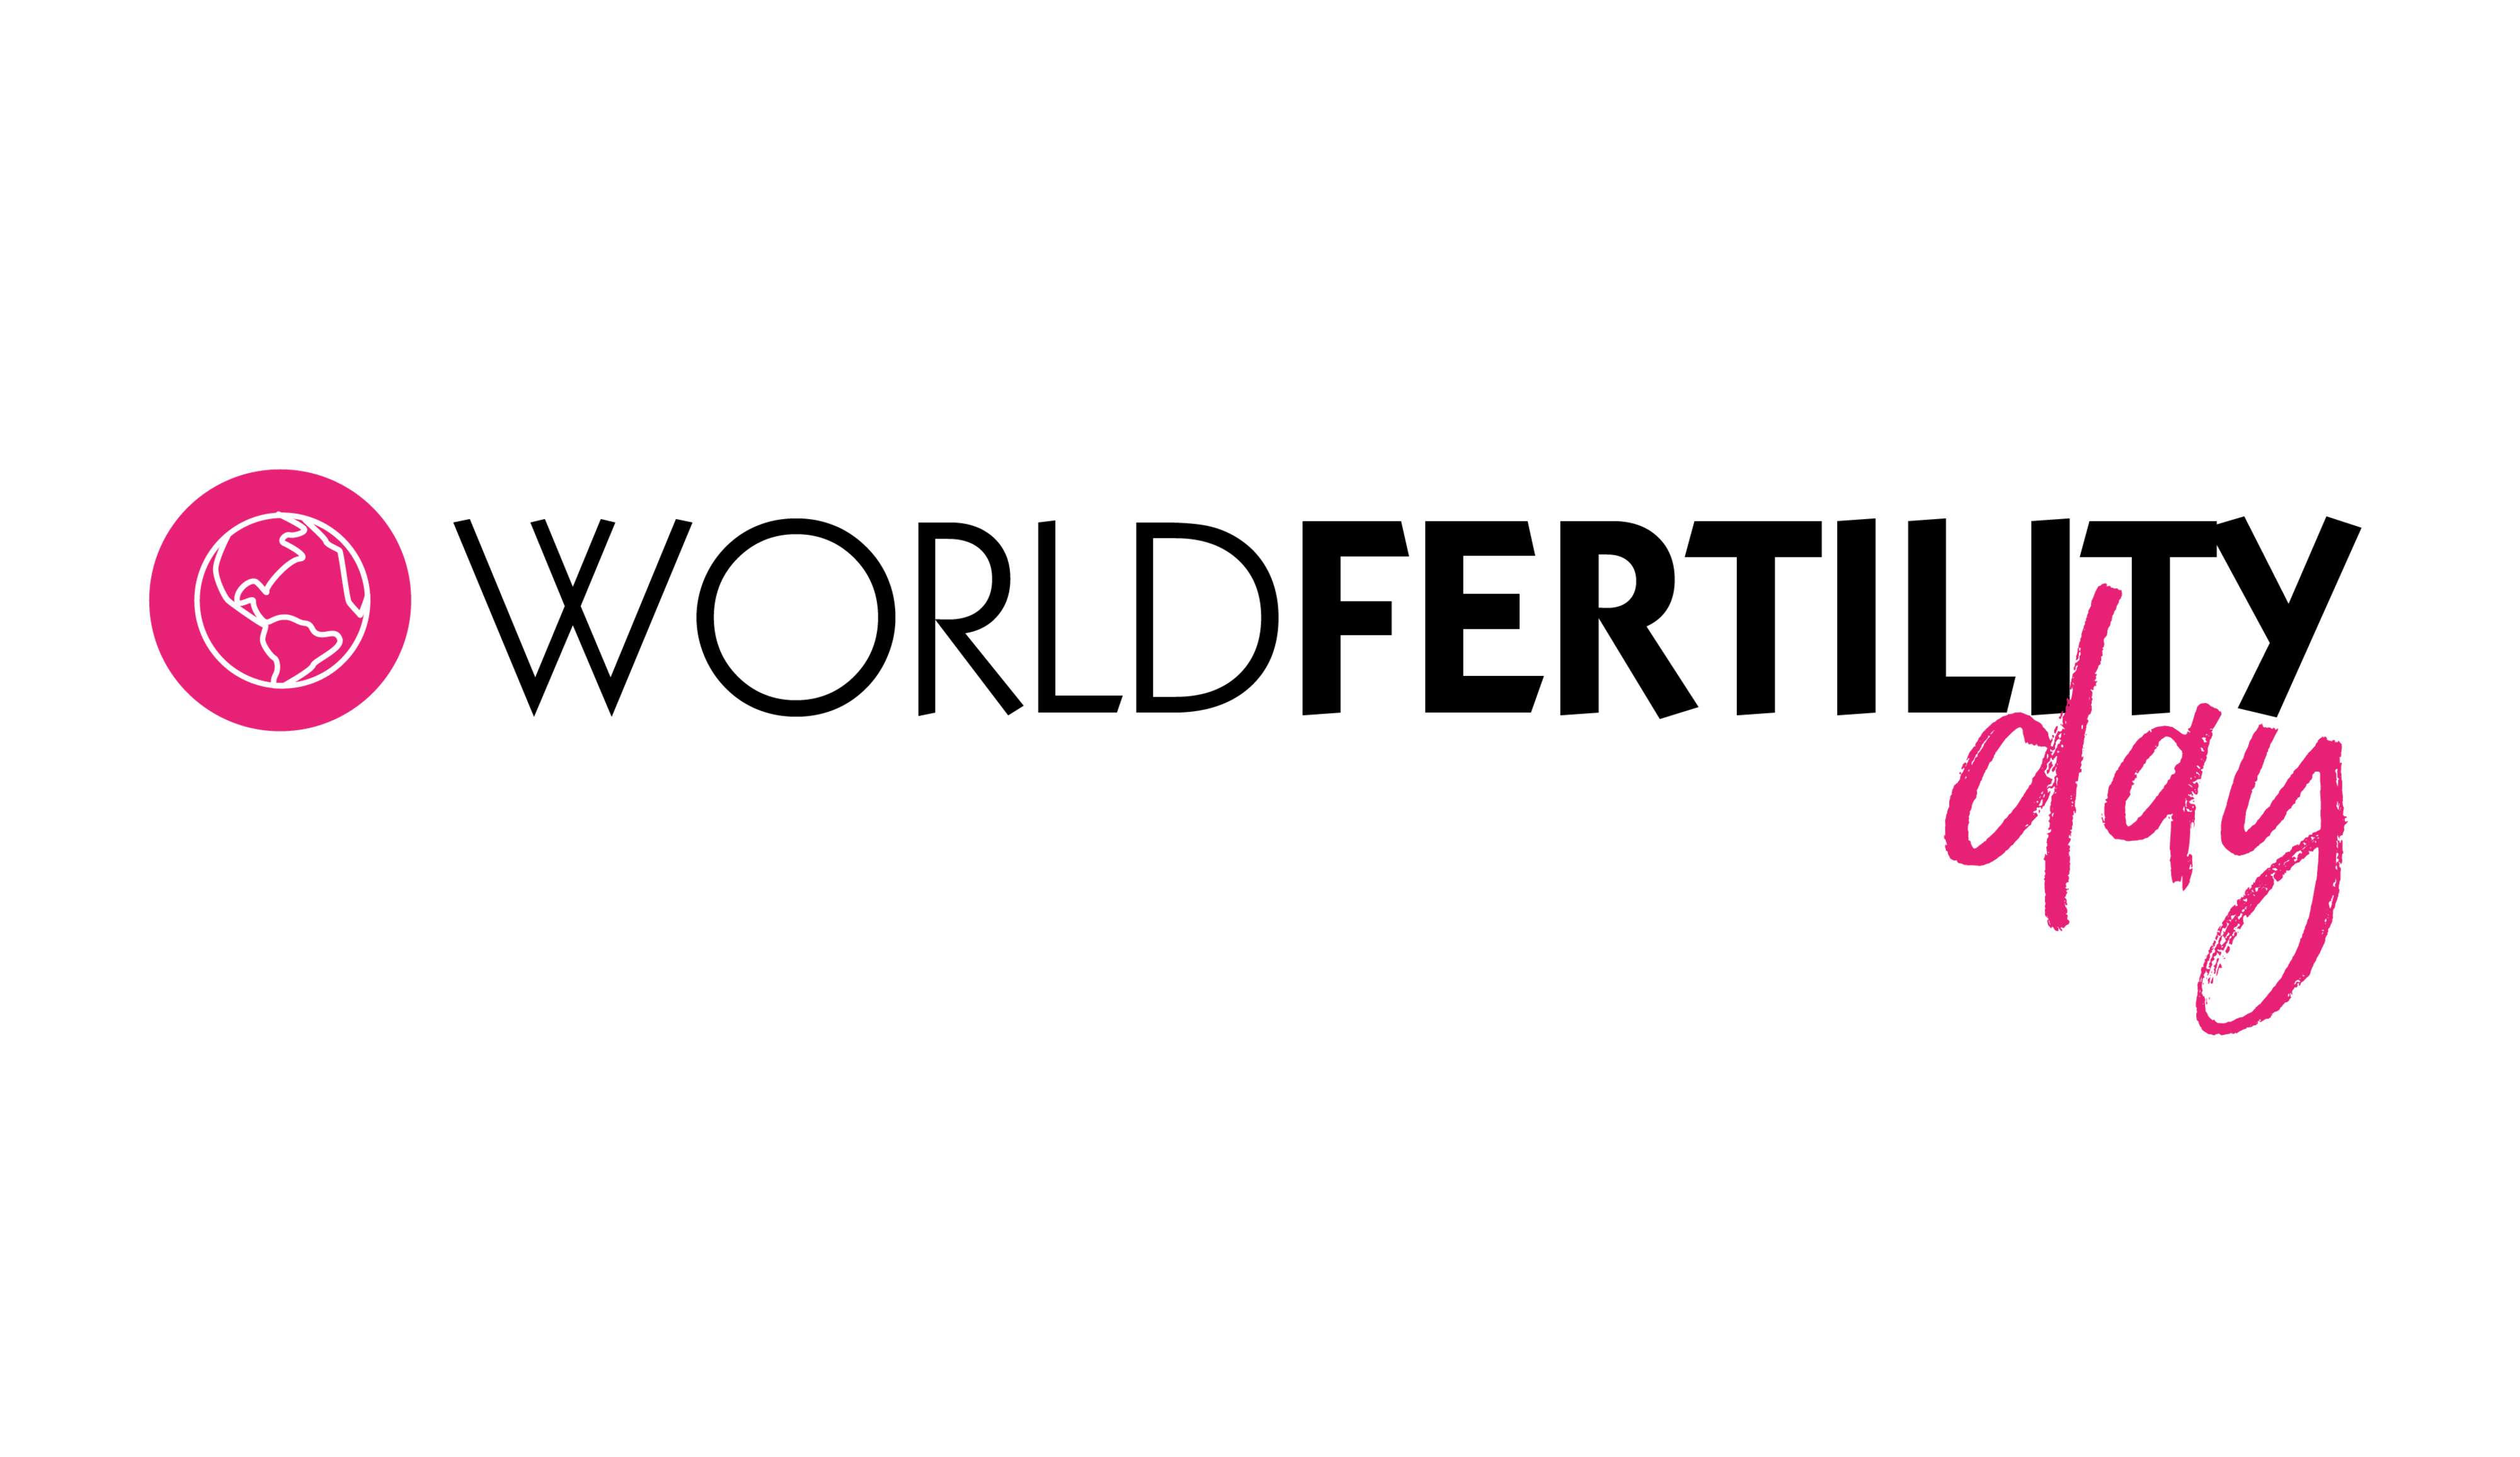 Home World Fertility Day